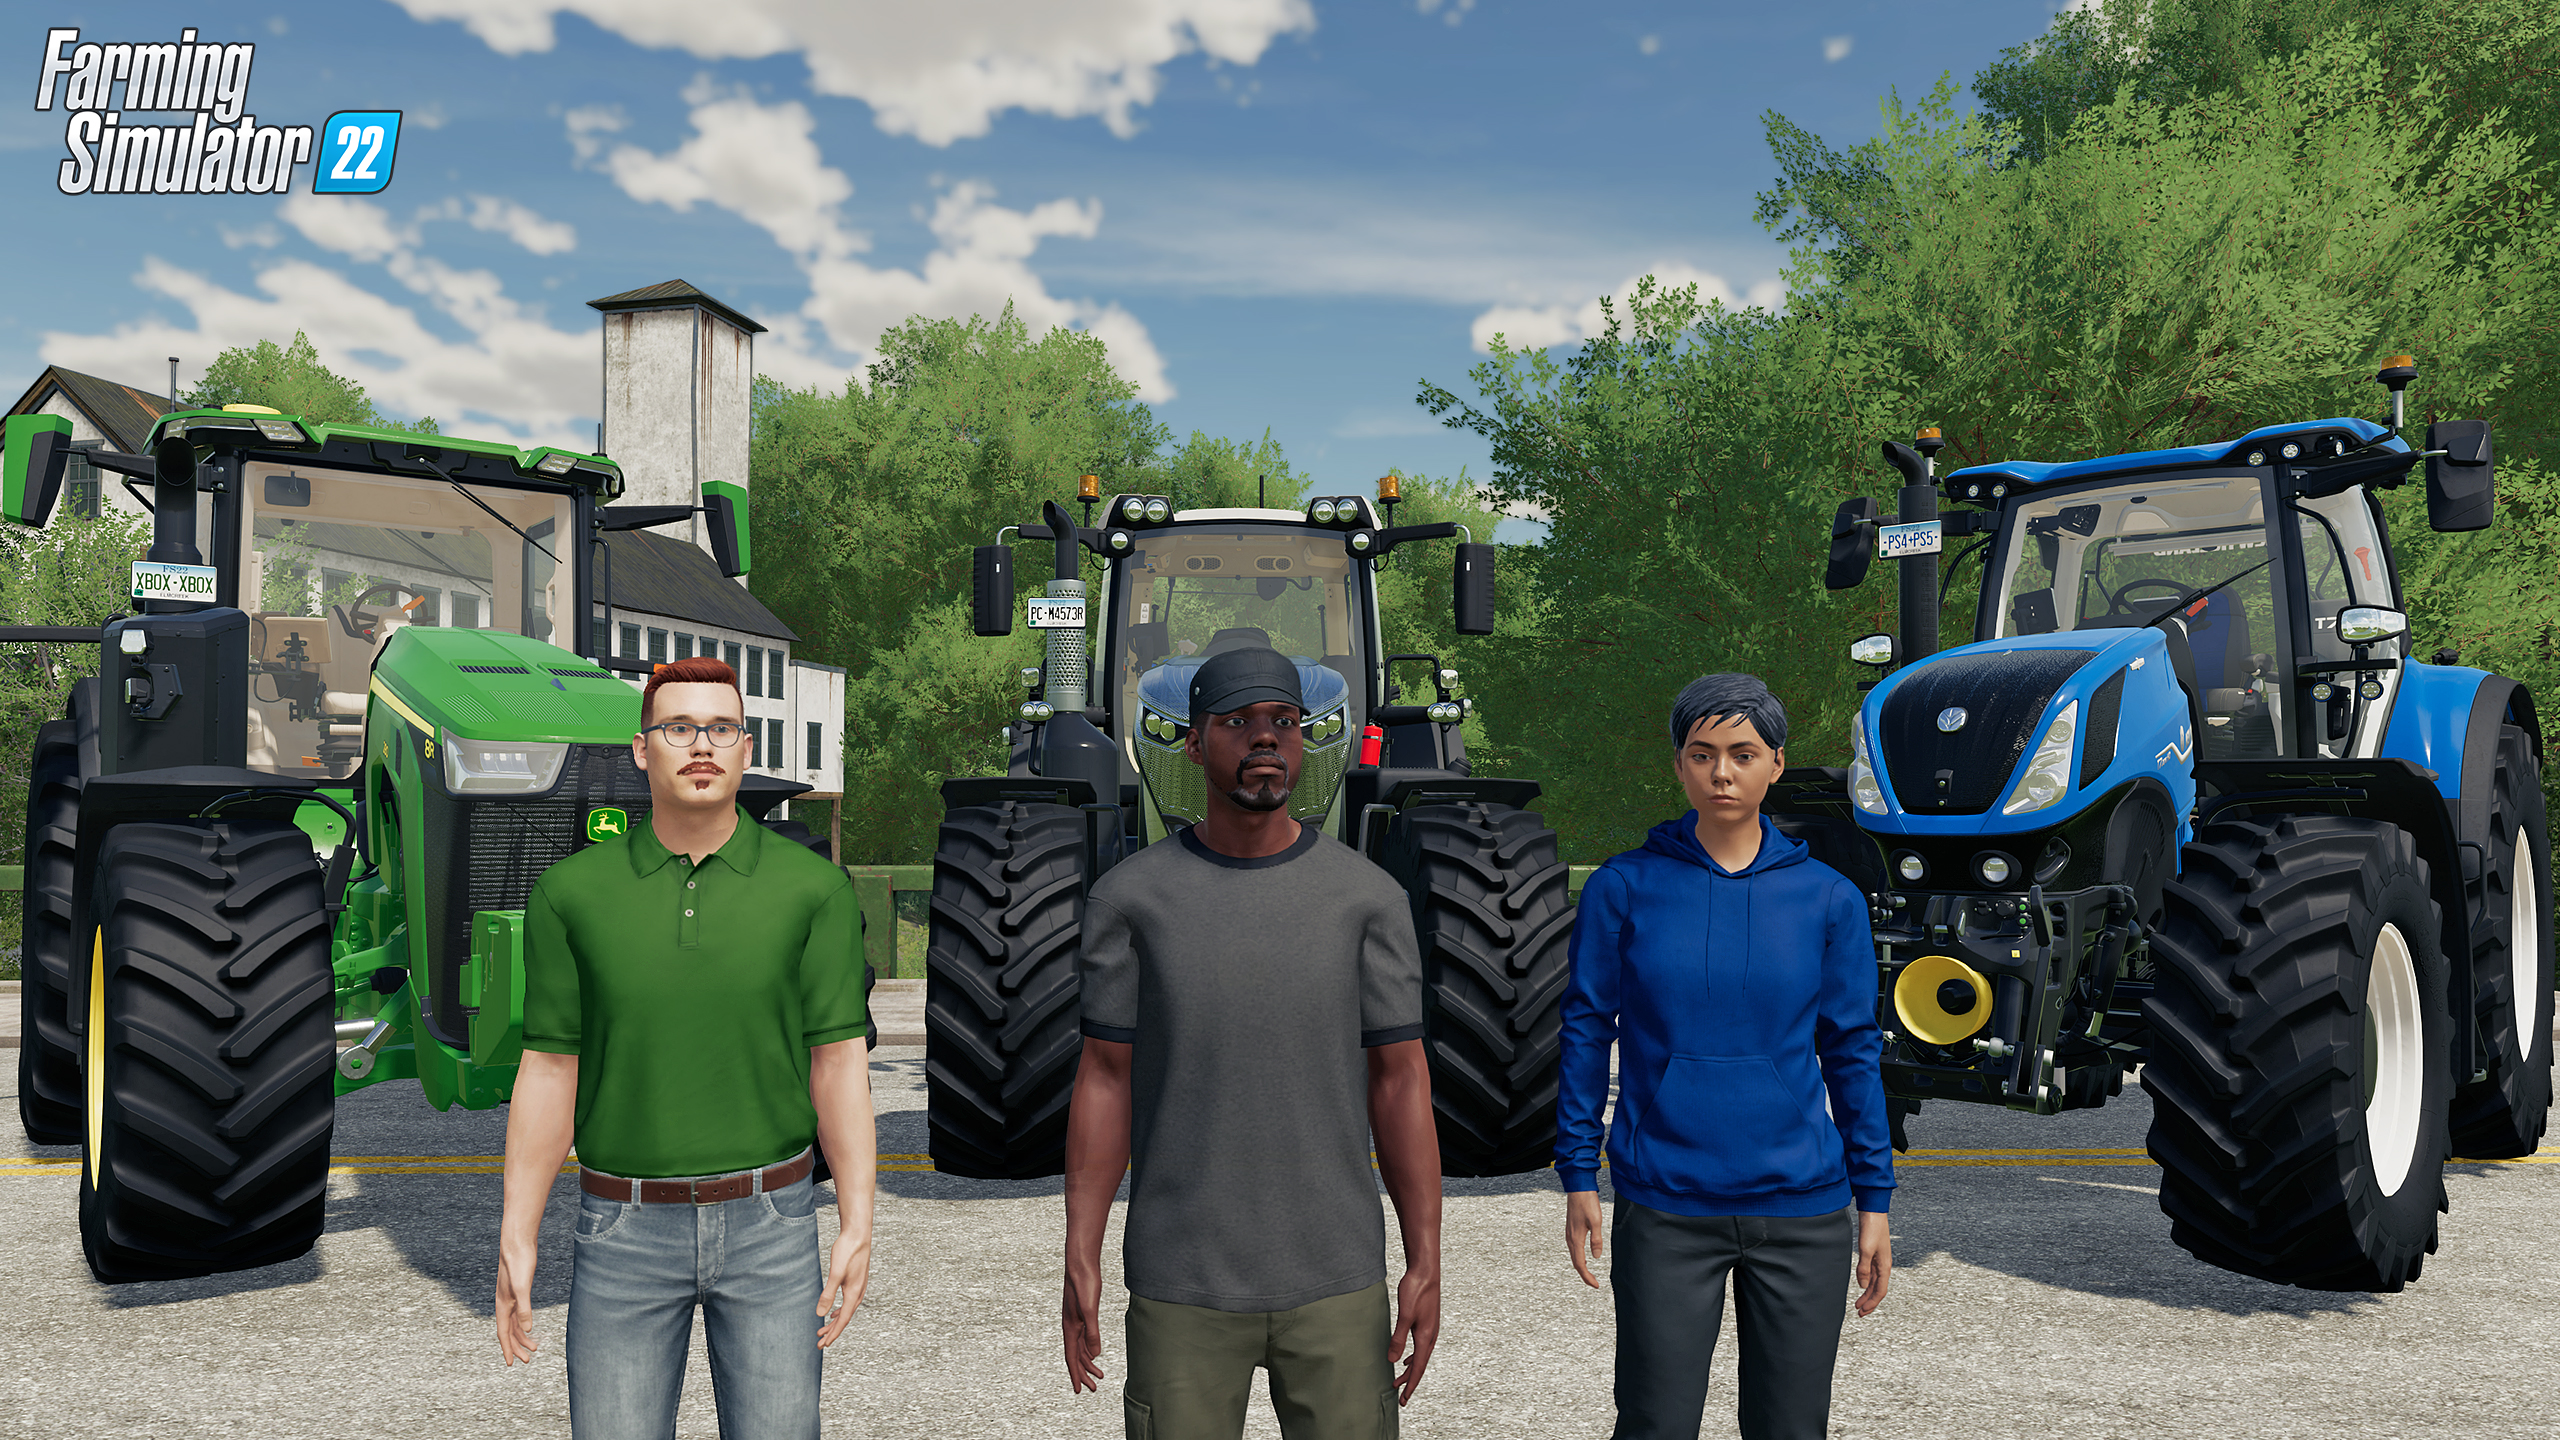 Farming Simulator 22 - Sony PlayStation 4 for sale online